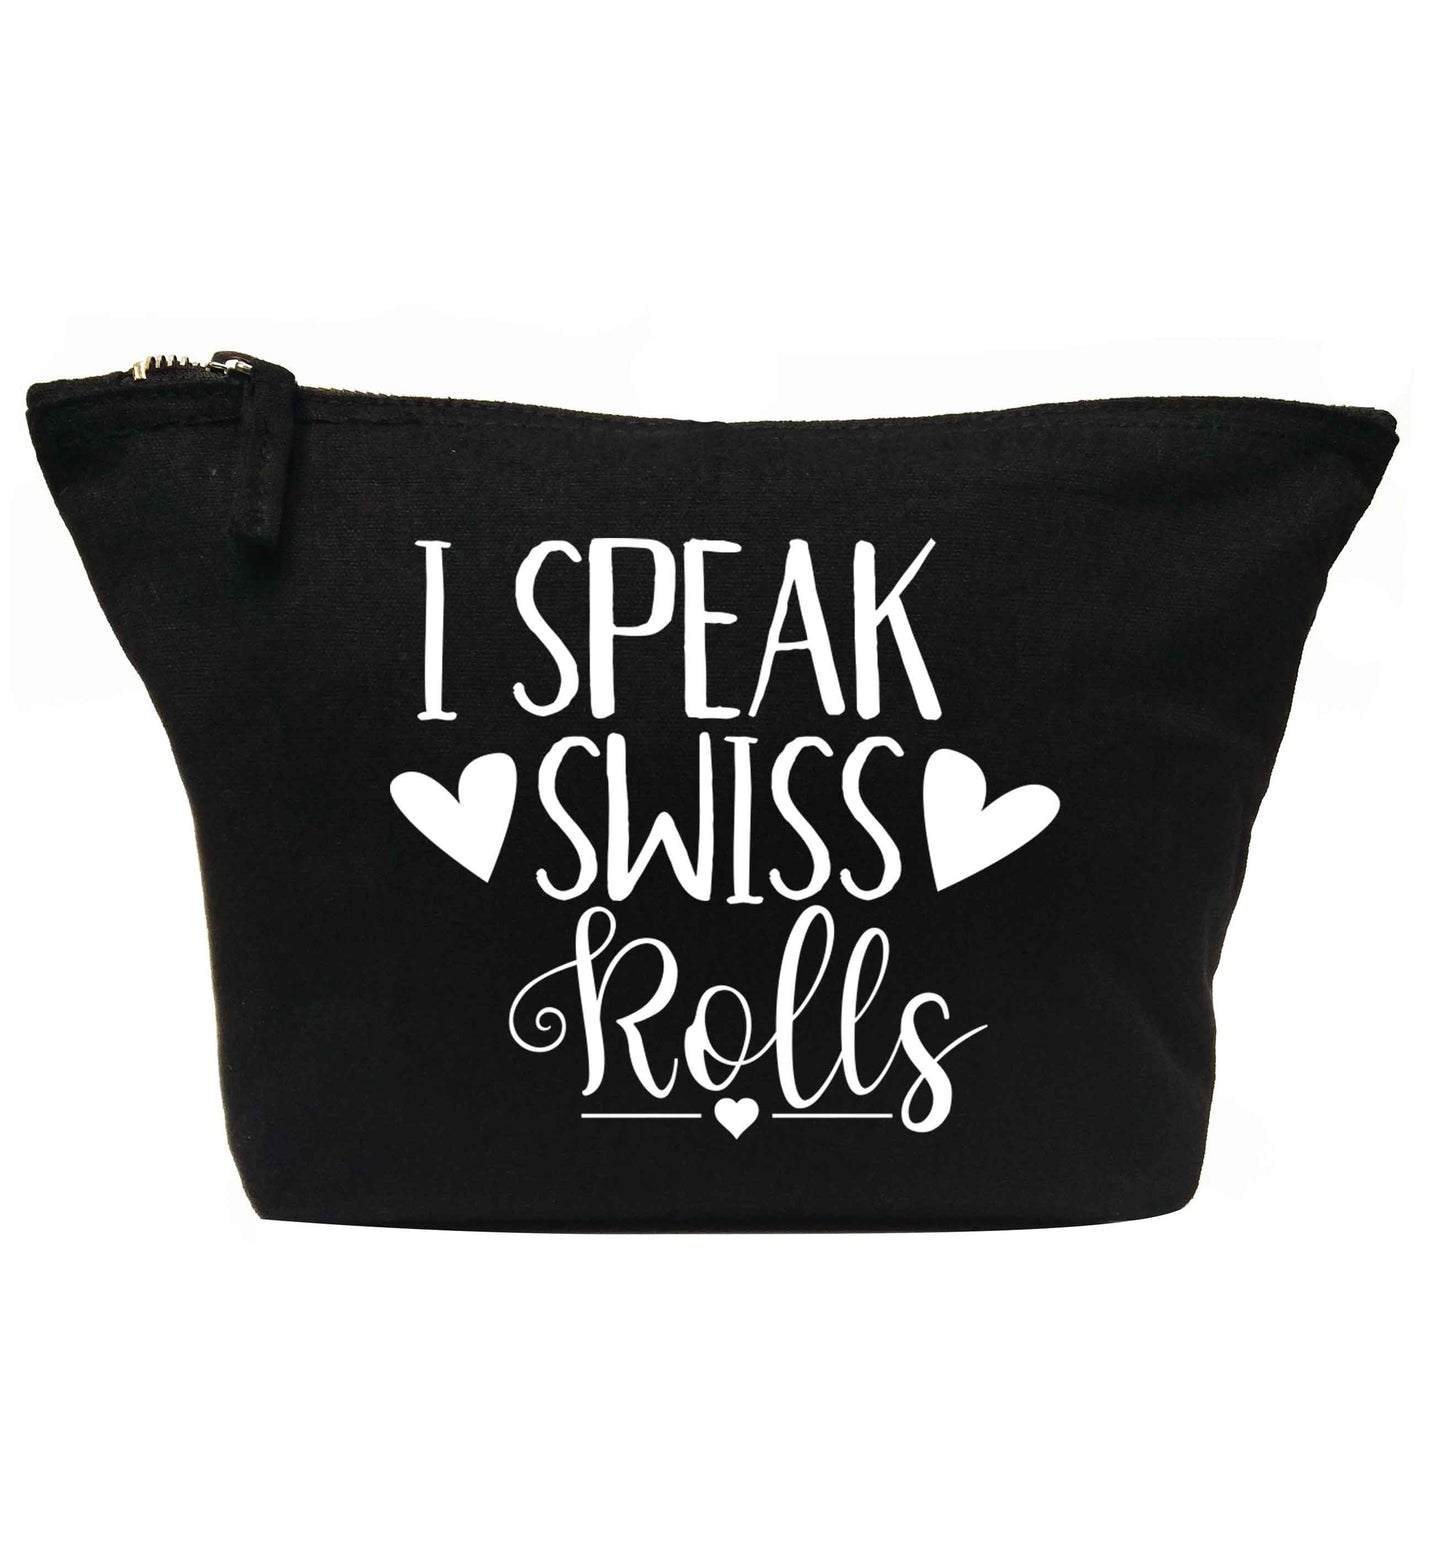 I speak swiss..rolls | makeup / wash bag